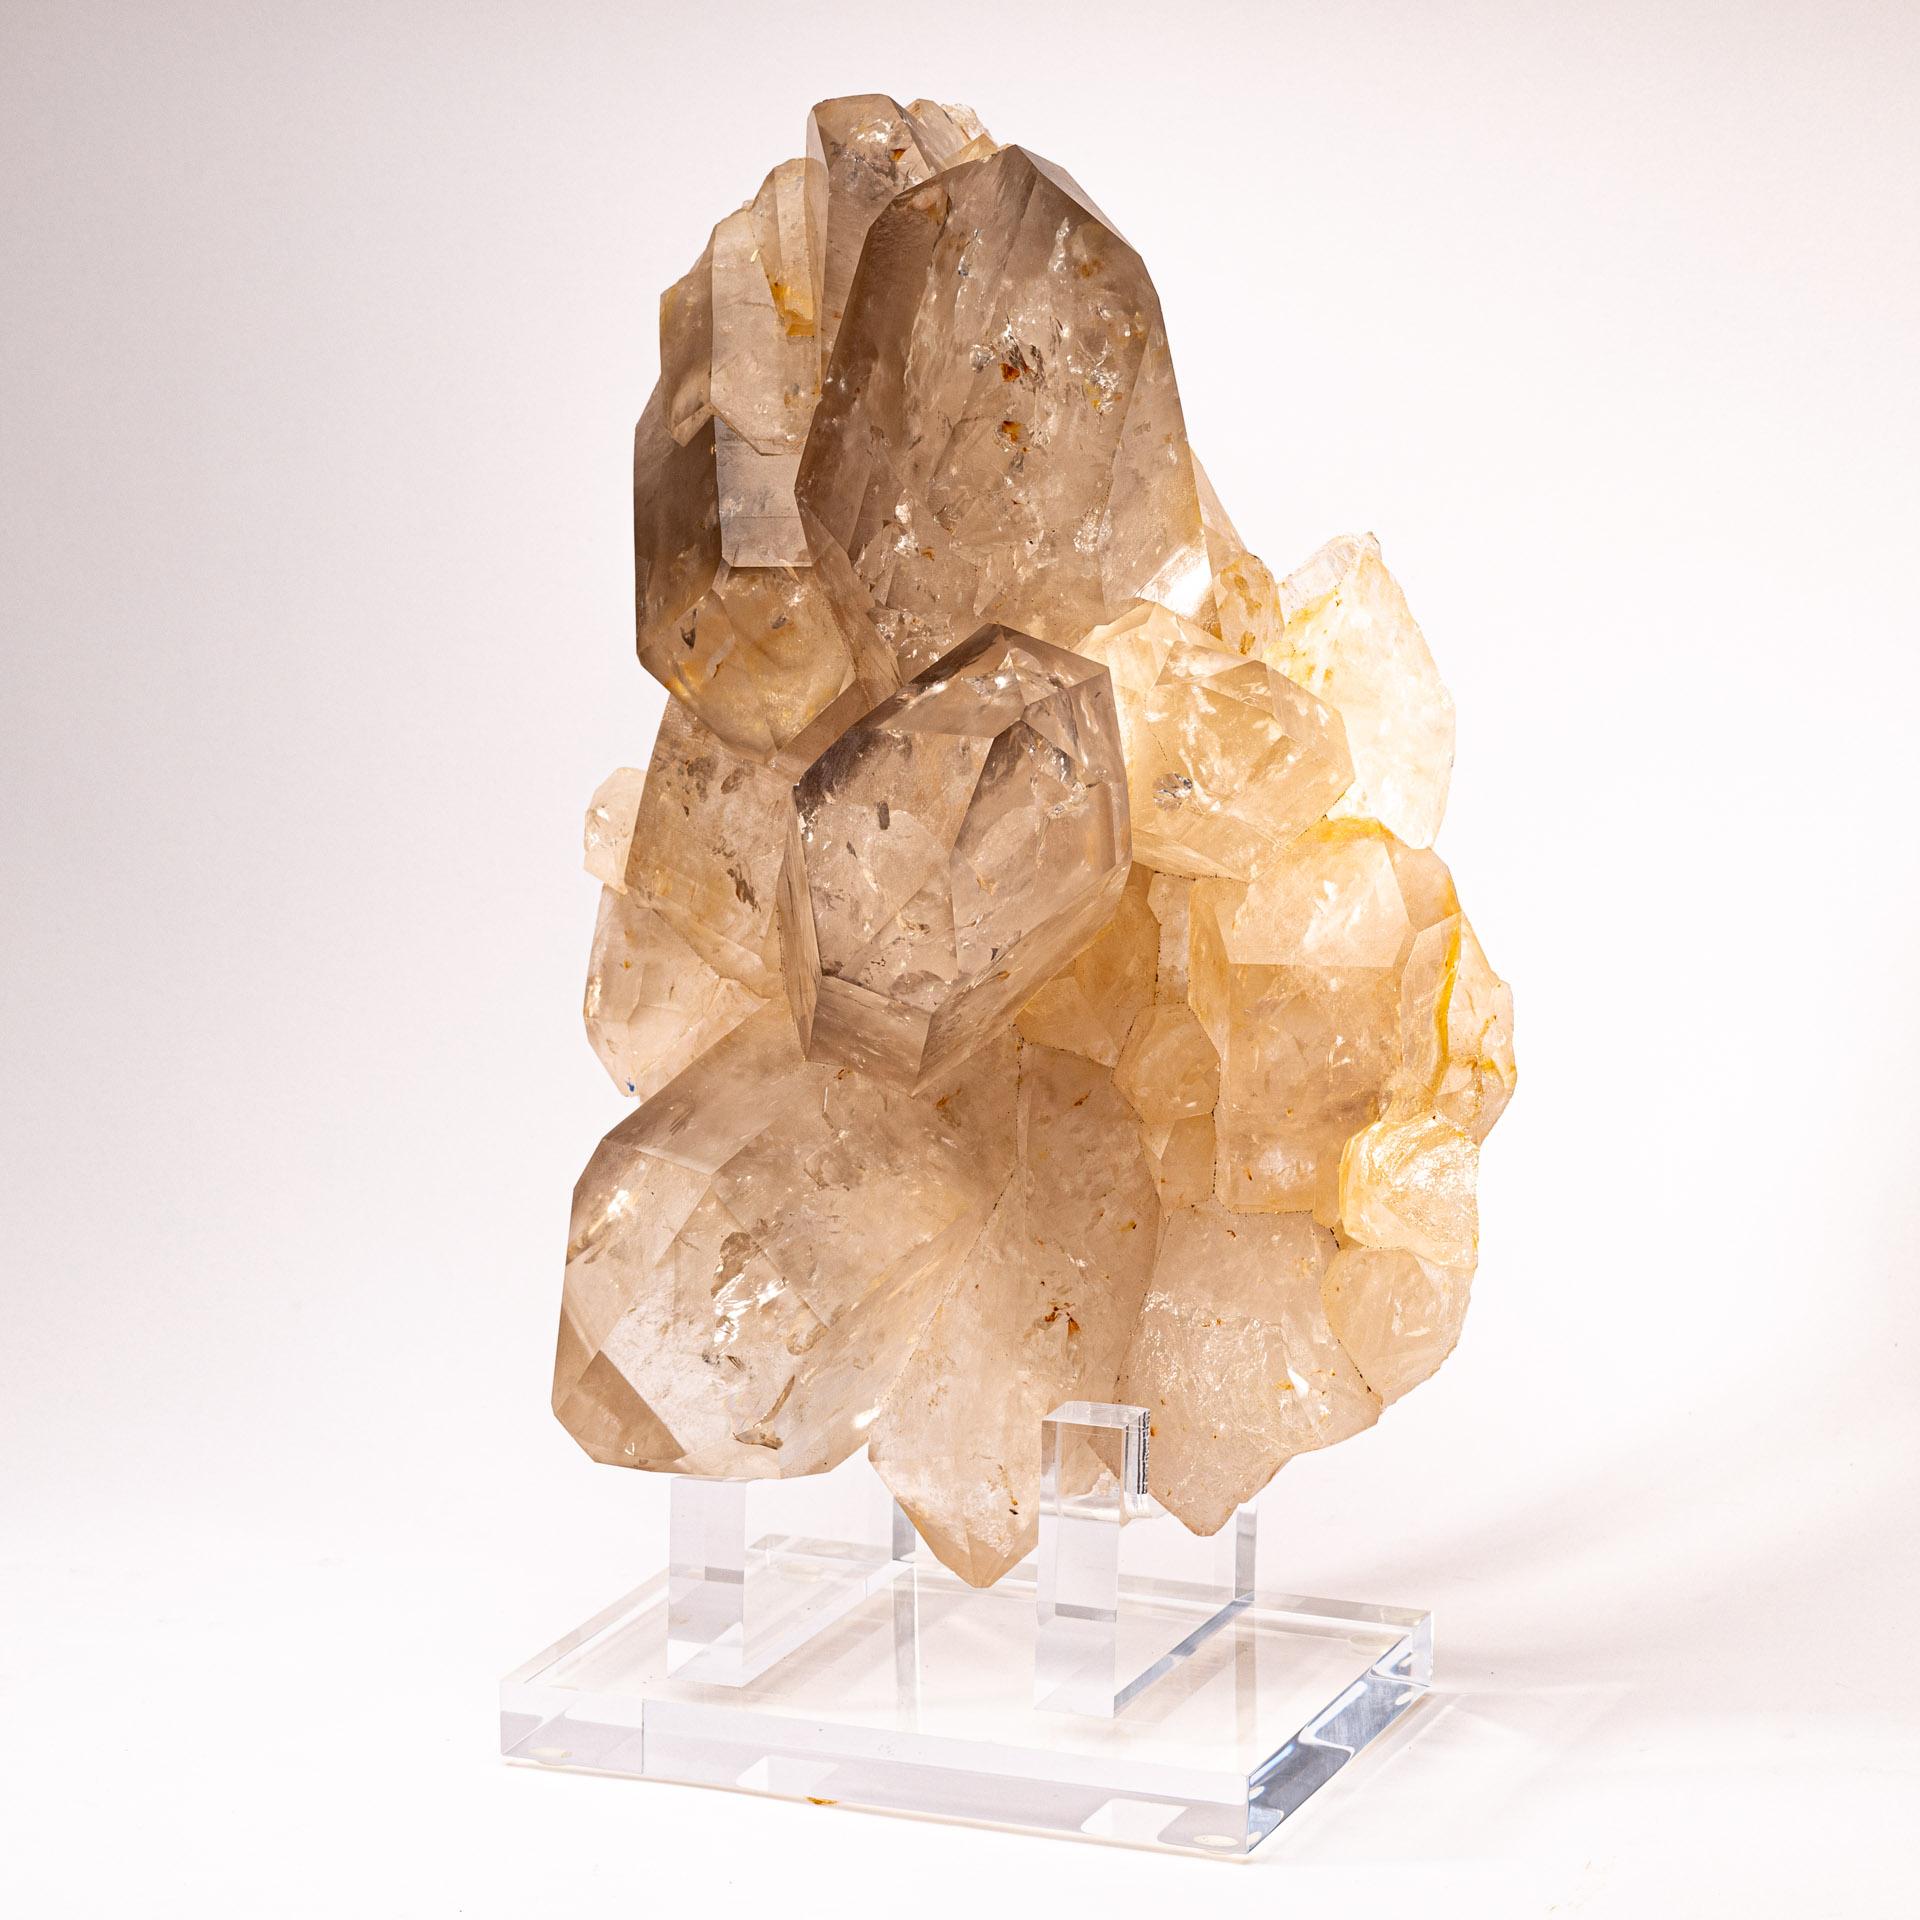 Impressive natural Brazilian quartz specimen cluster mounted on custom acrylic base.